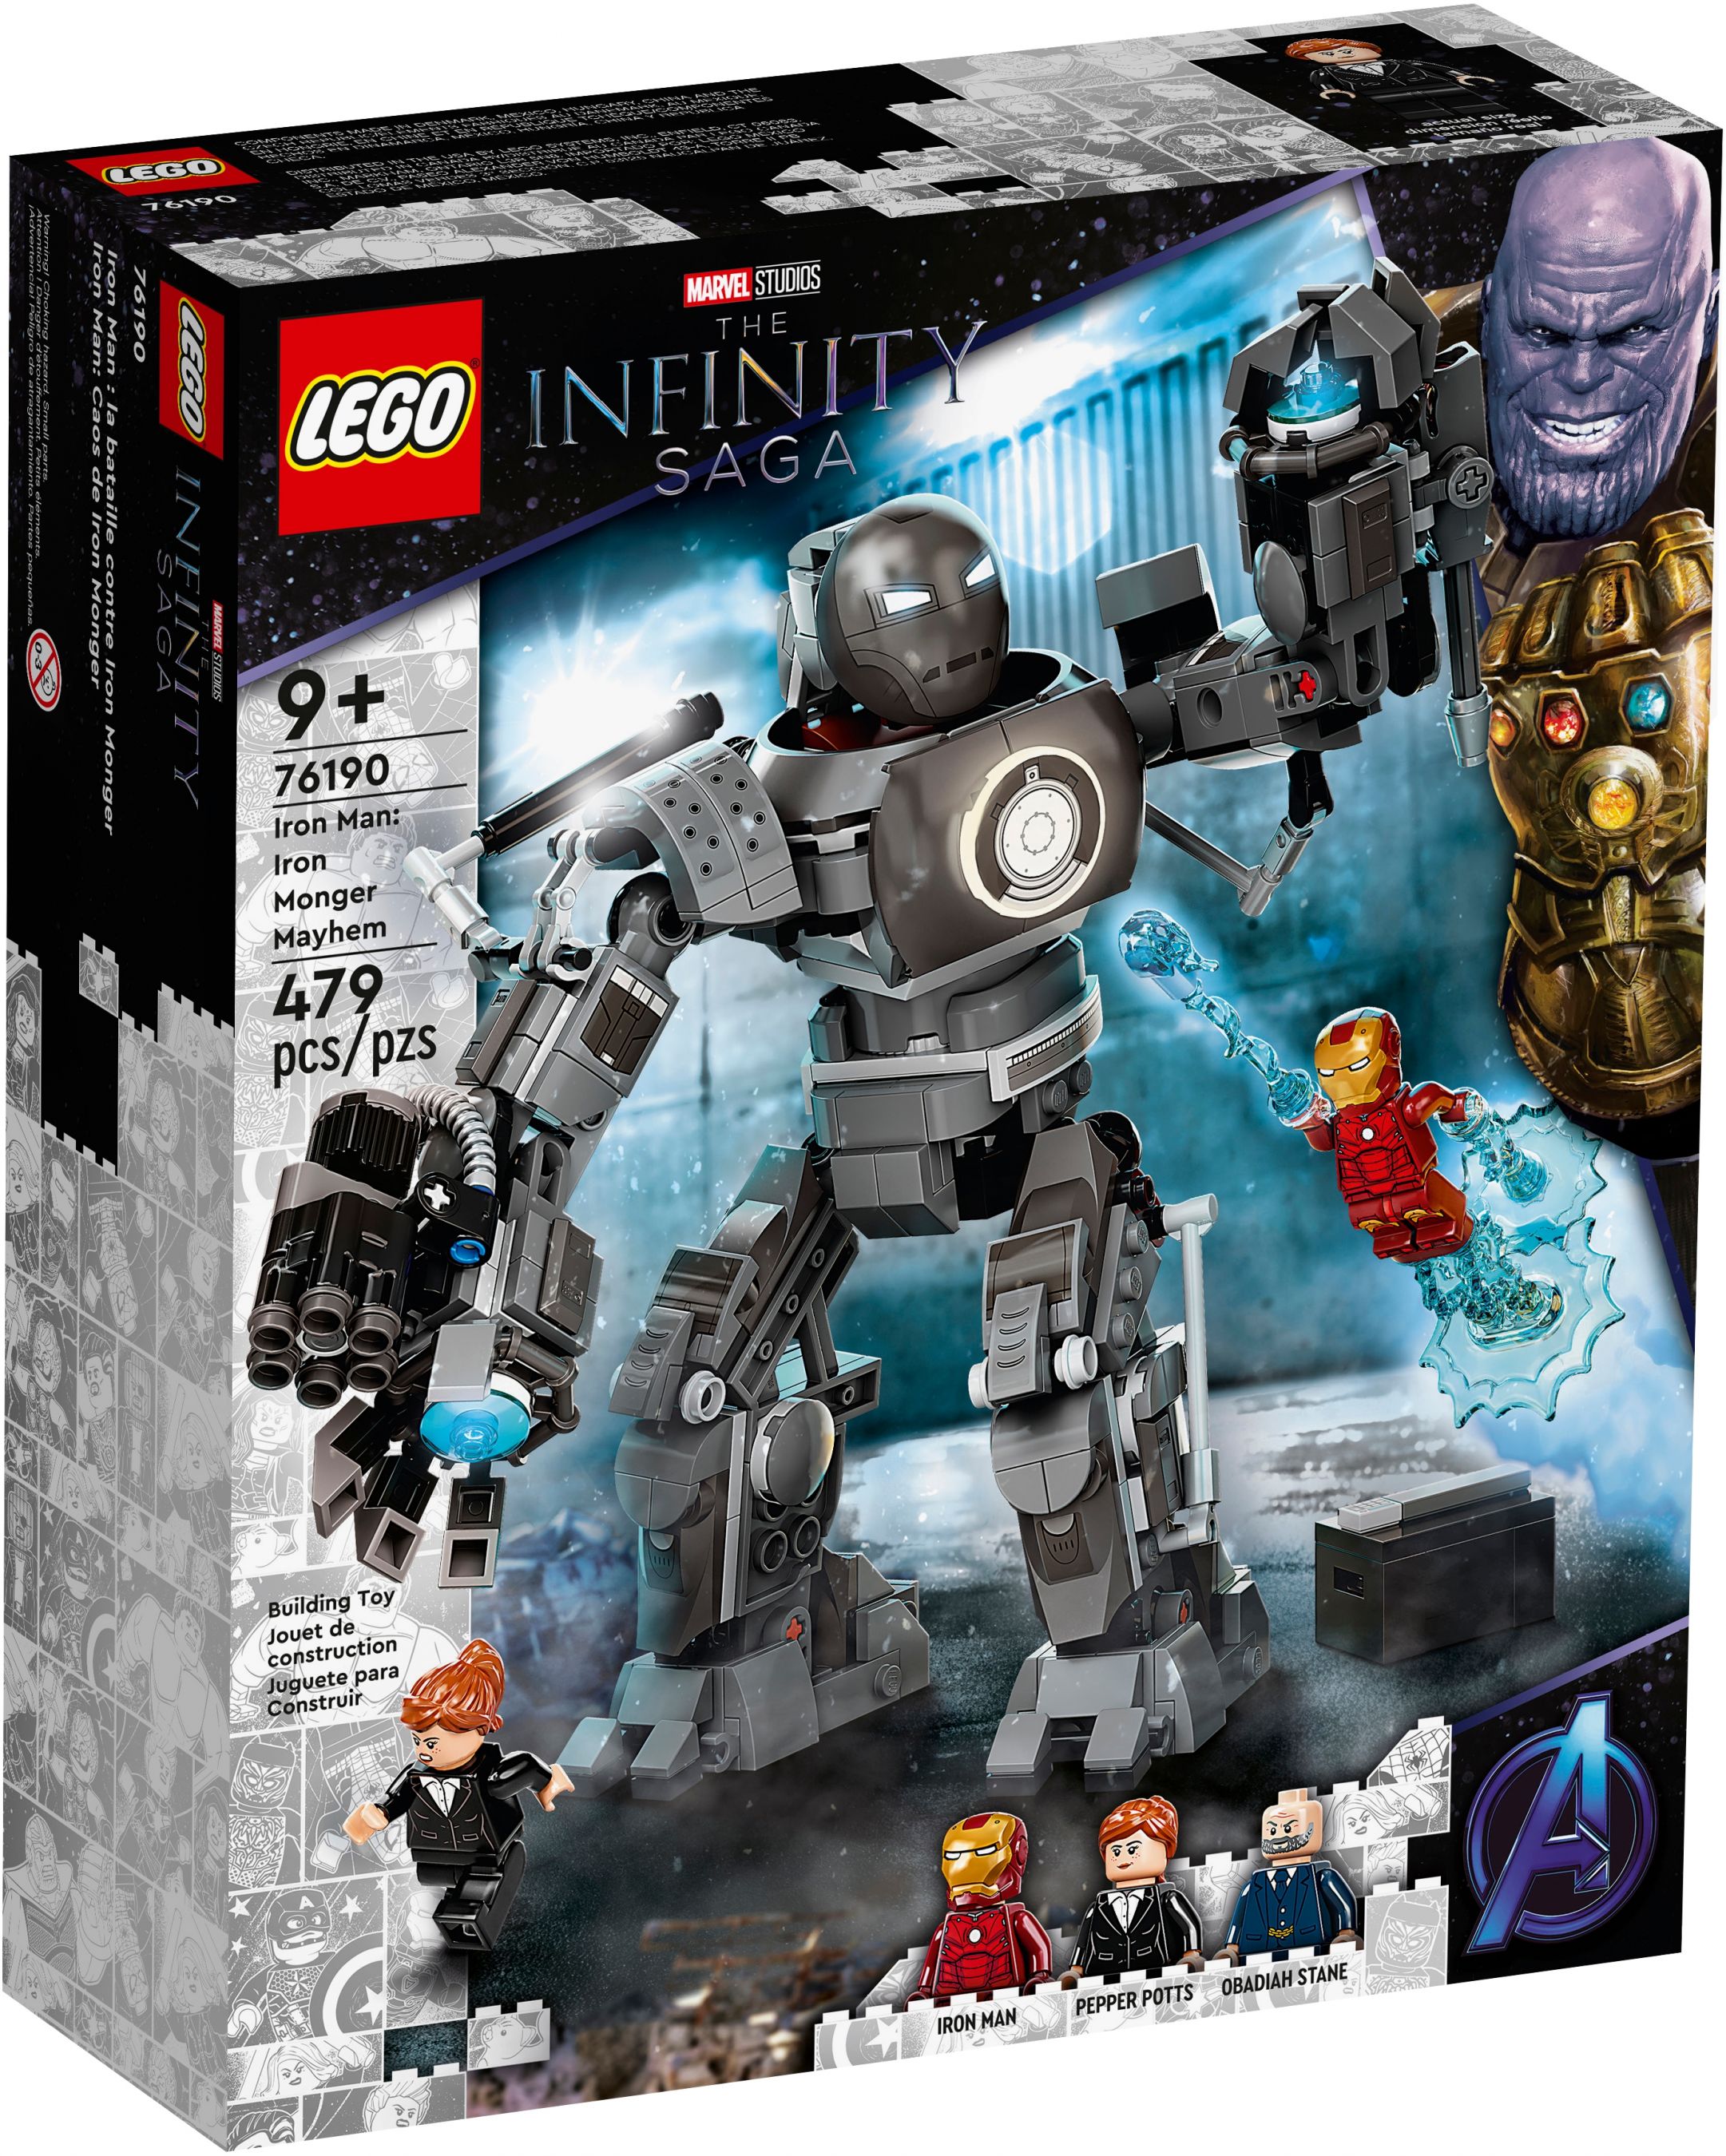 LEGO Super Heroes 76190 Iron Man und das Chaos durch Iron Monger LEGO_76190_alt1.jpg